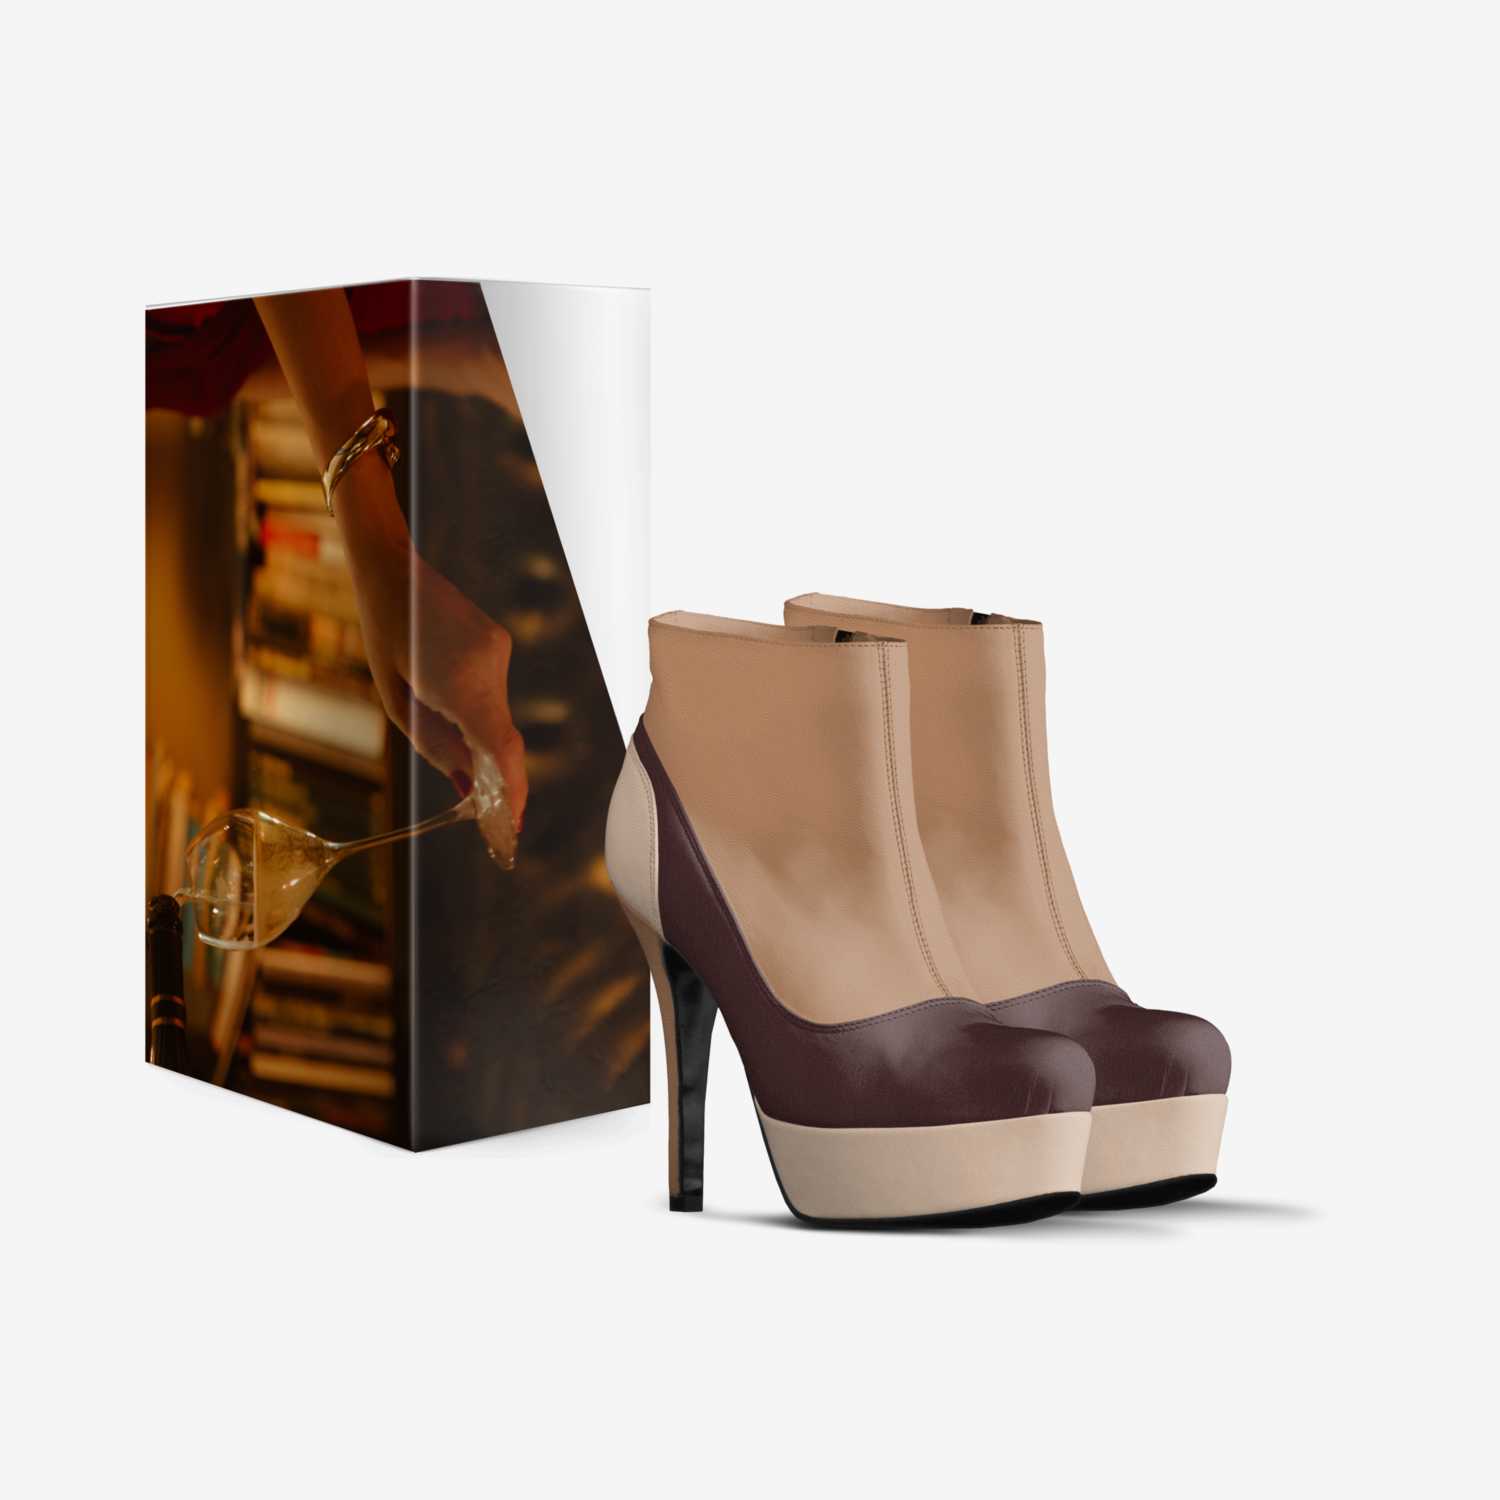 Her XXXVIII Spec custom made in Italy shoes by Gary Fields | Box view